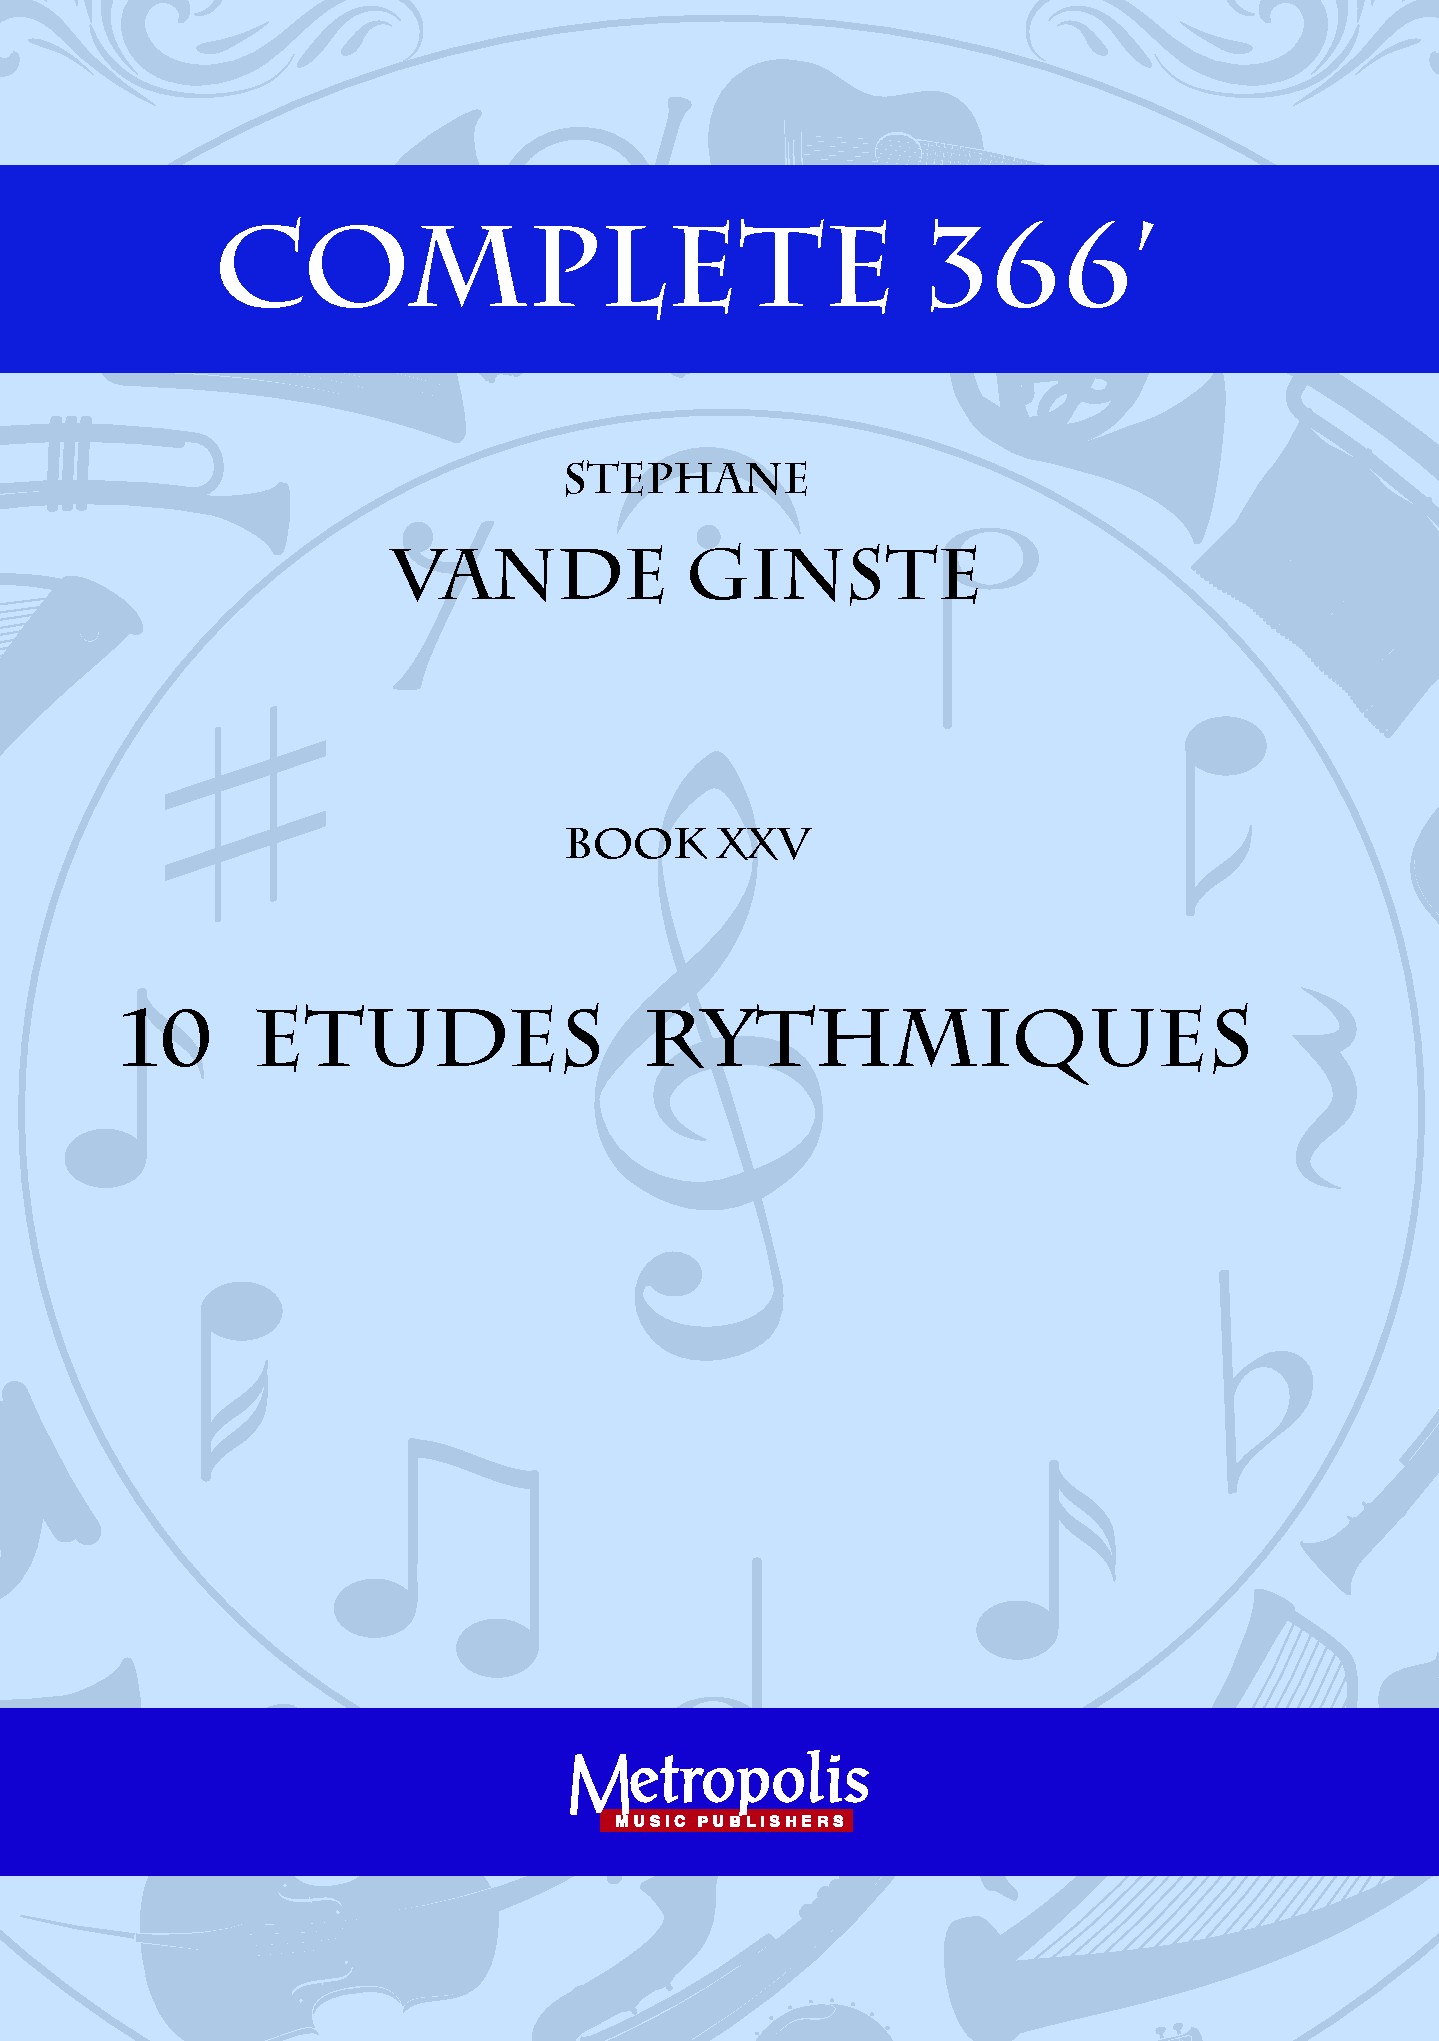 Complete 366' Book Xxv: 10 Etudes Rythmiques (VANDE GINSTE STEPHANE)